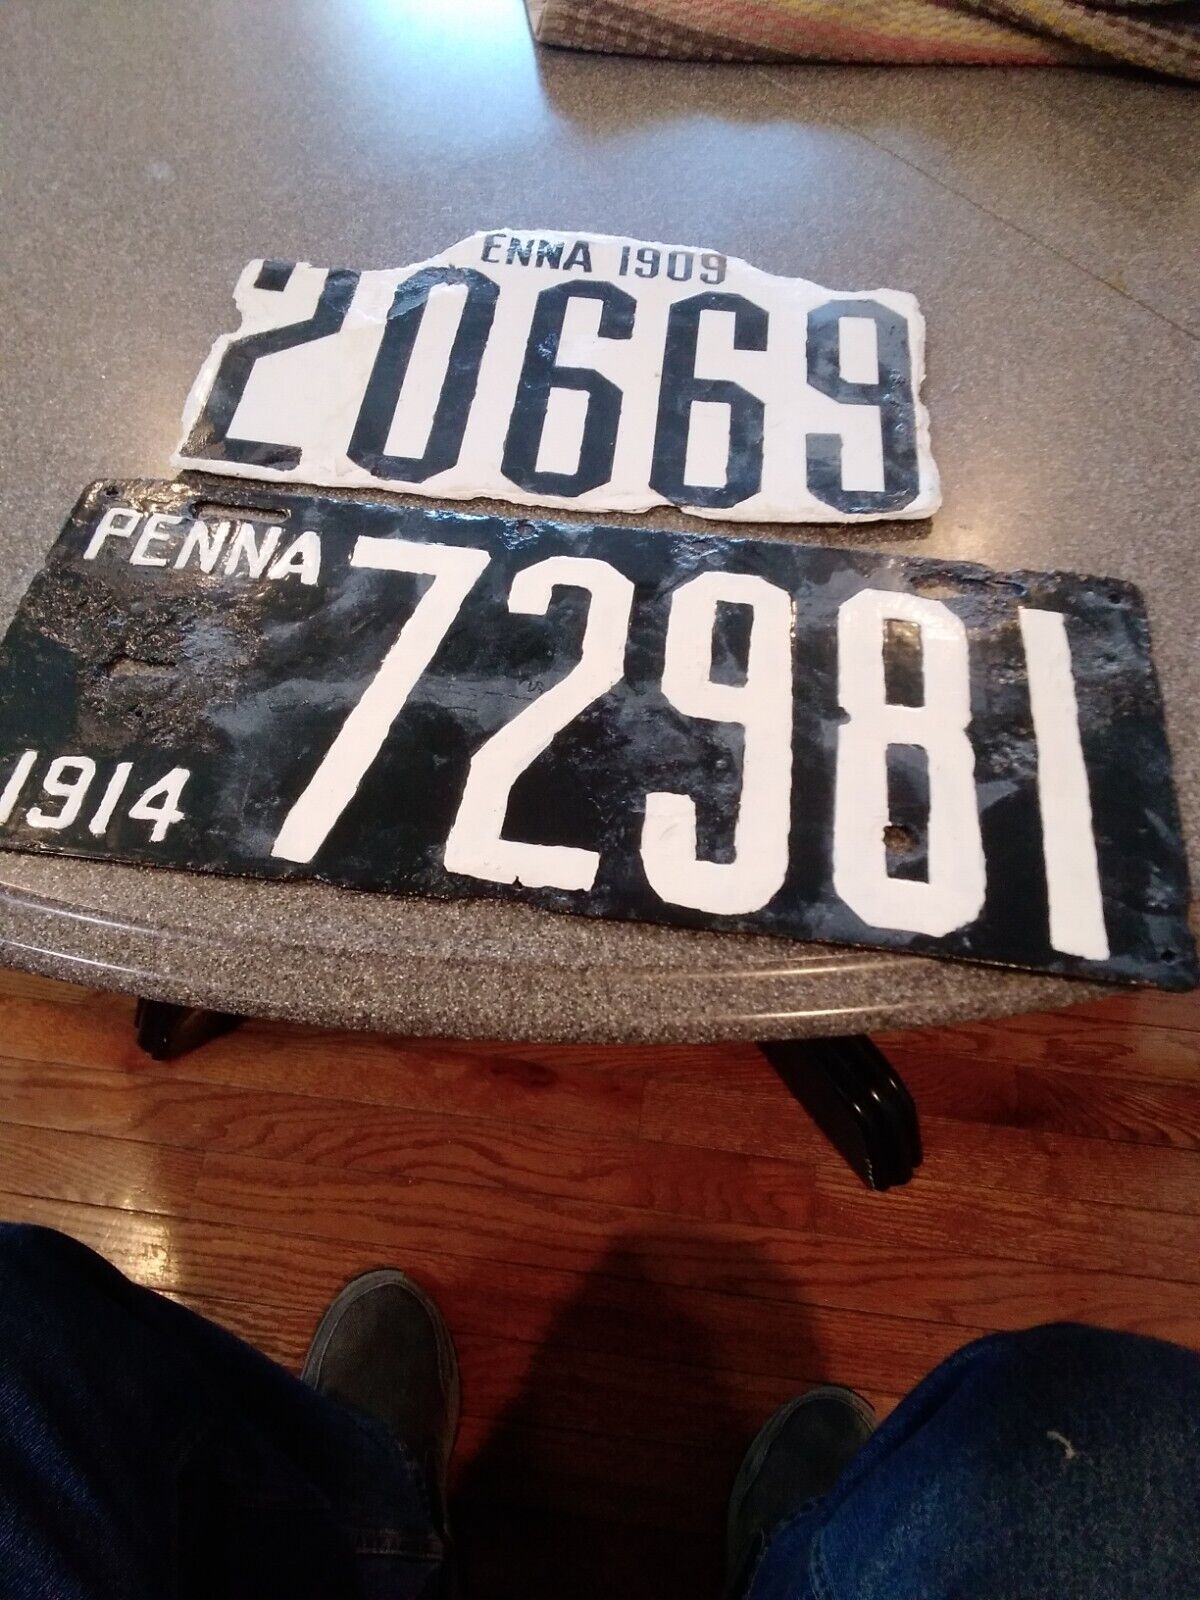 1909 & 1914 PENNSYLVANIA license plates  20669 &72981